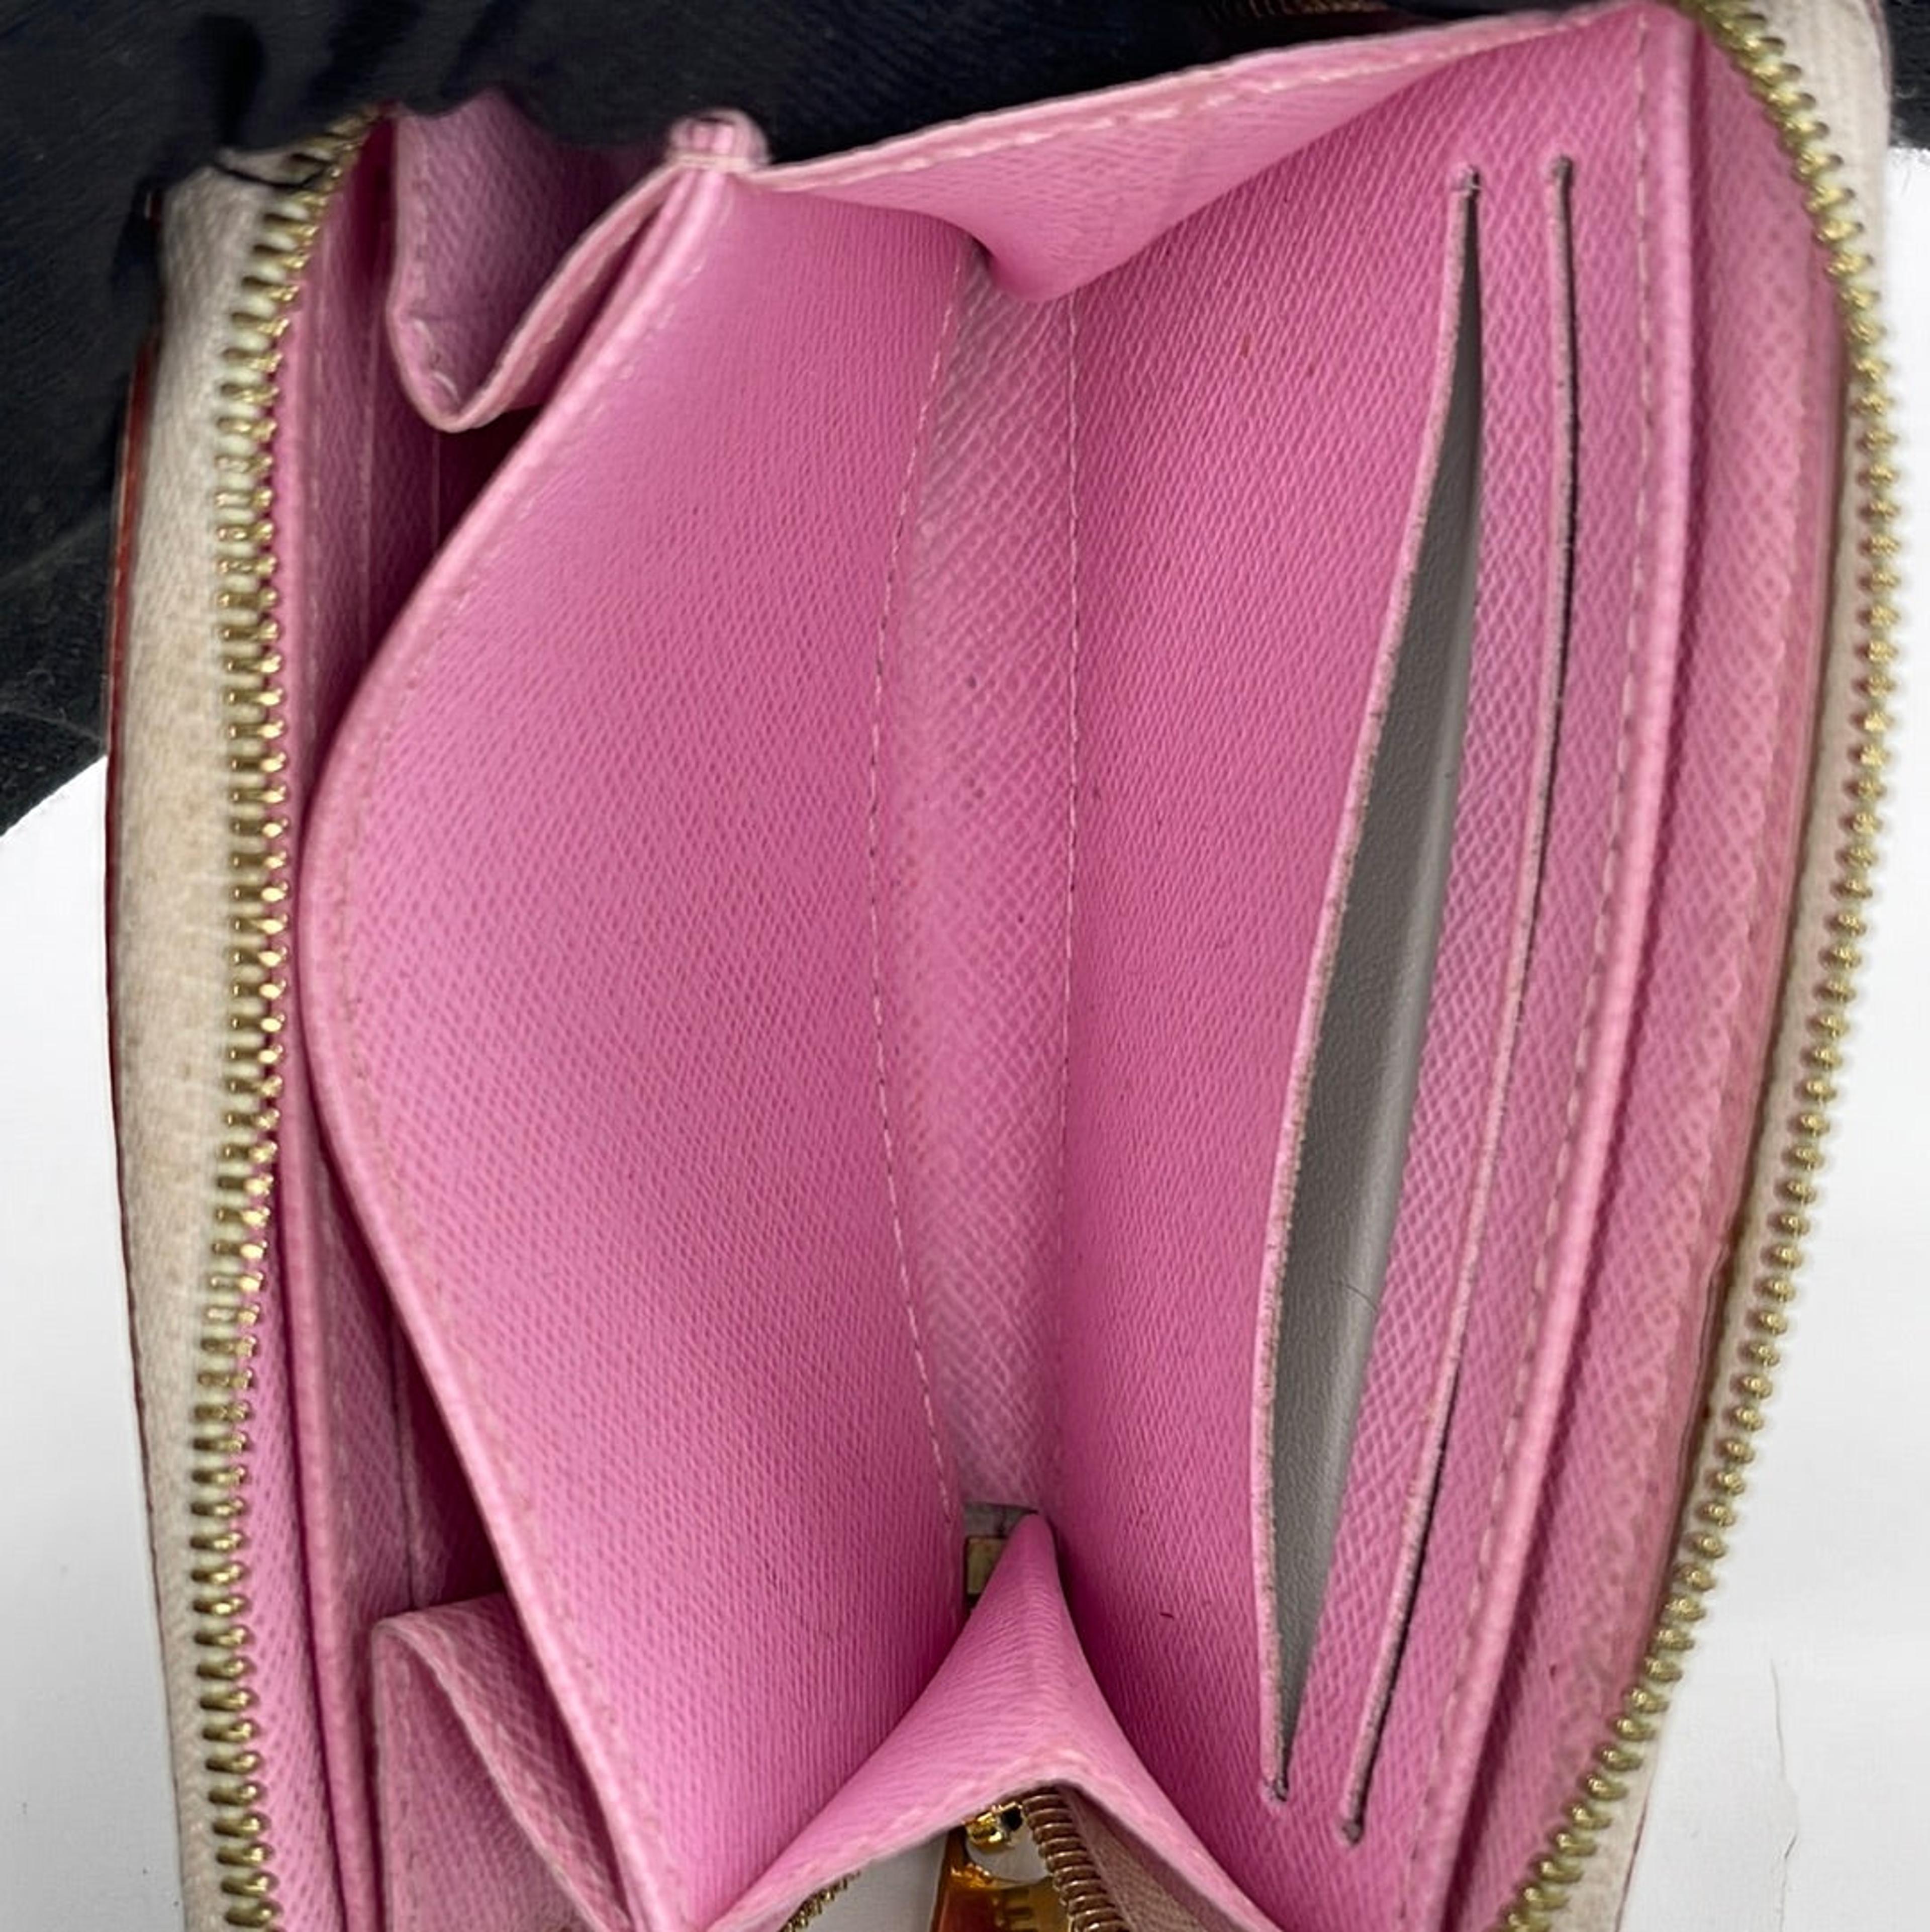 PRELOVED Louis Vuitton White MULTICOLOR Mini Zippy Wallet TS1130 082323